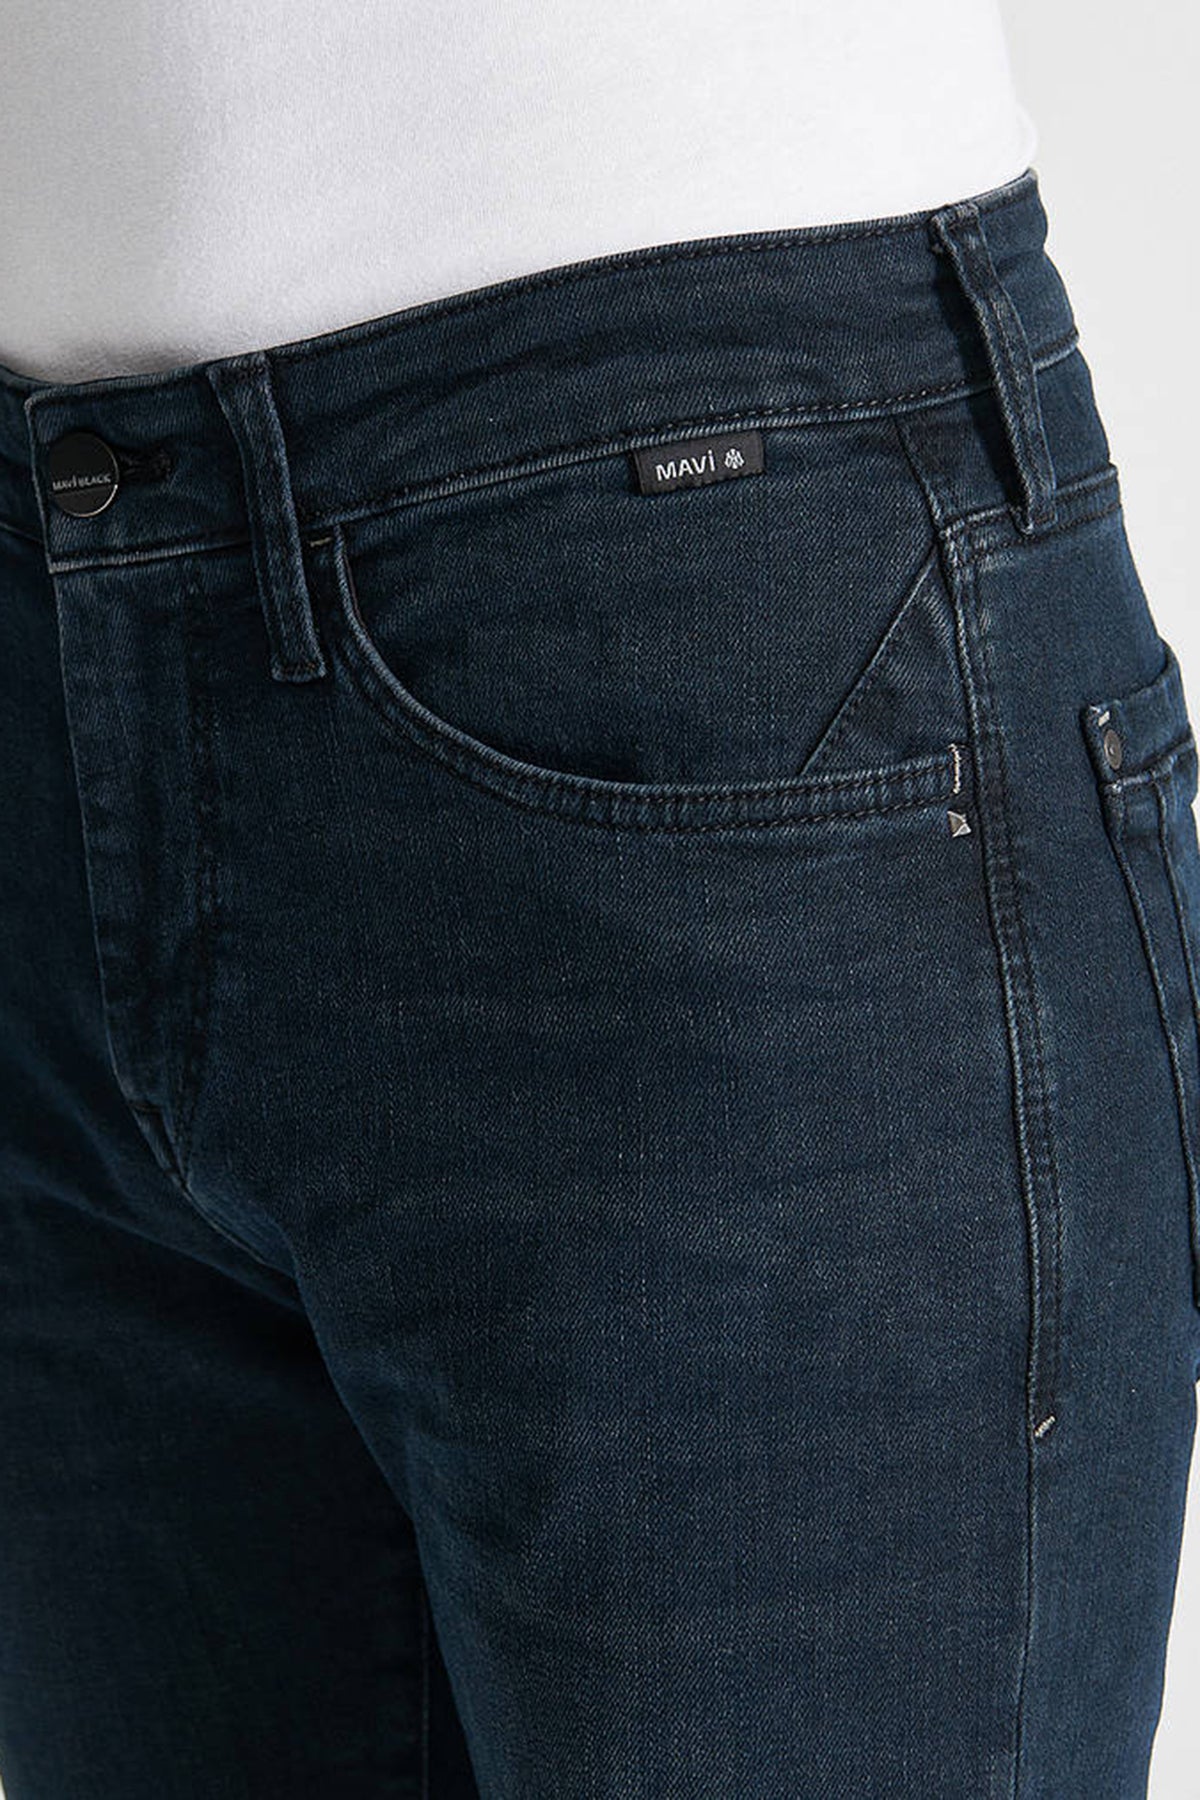 ג'ינס סקיני ארוך בגזרת סלים